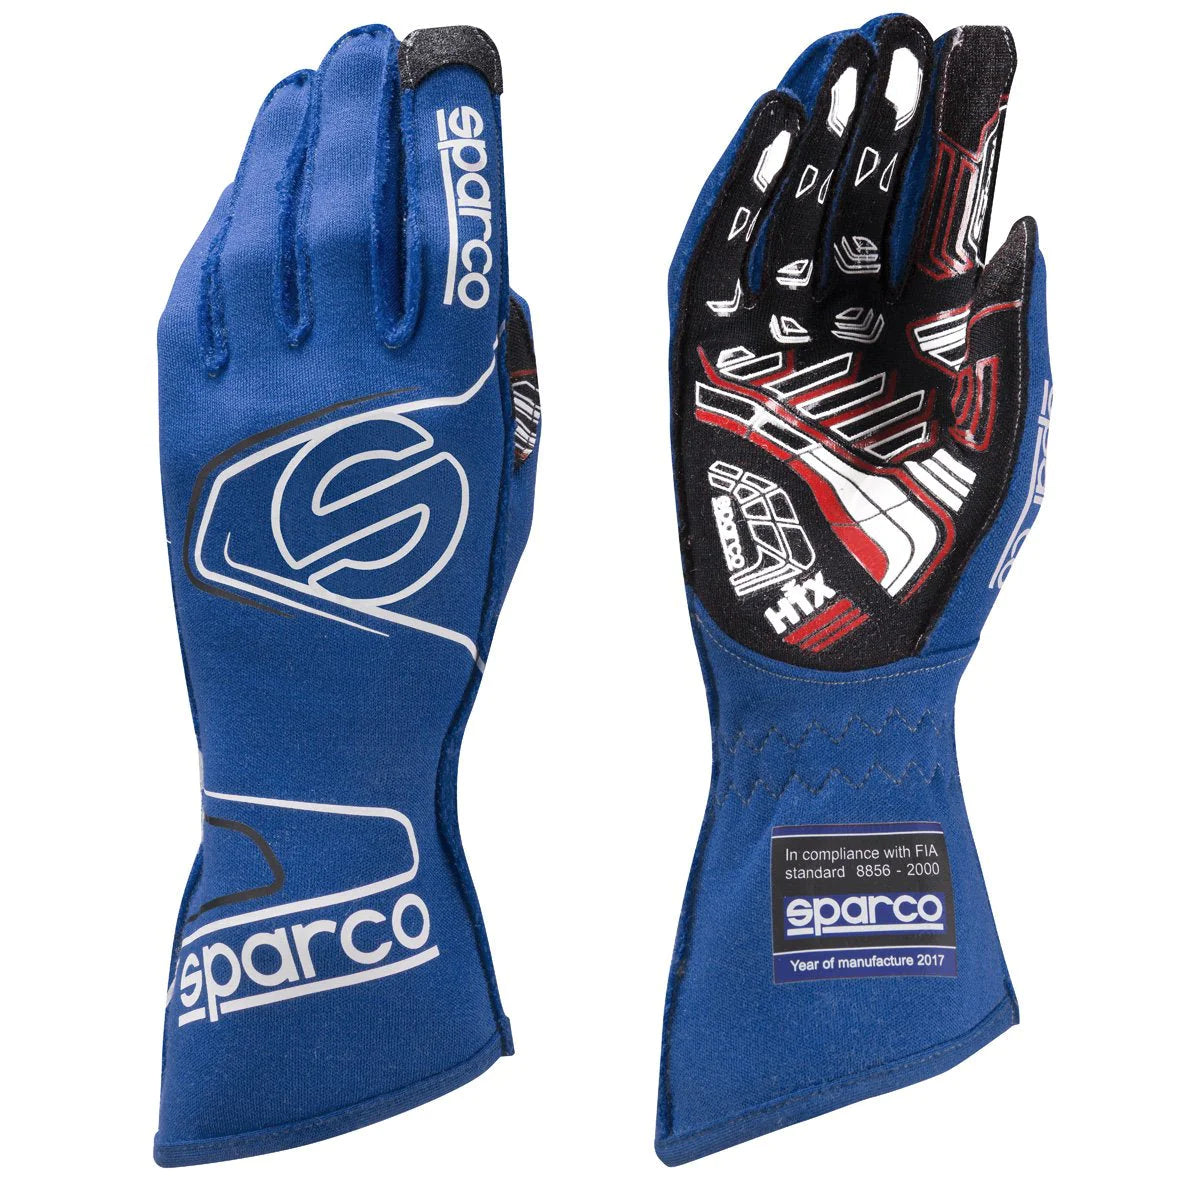 Racing Gloves under $100